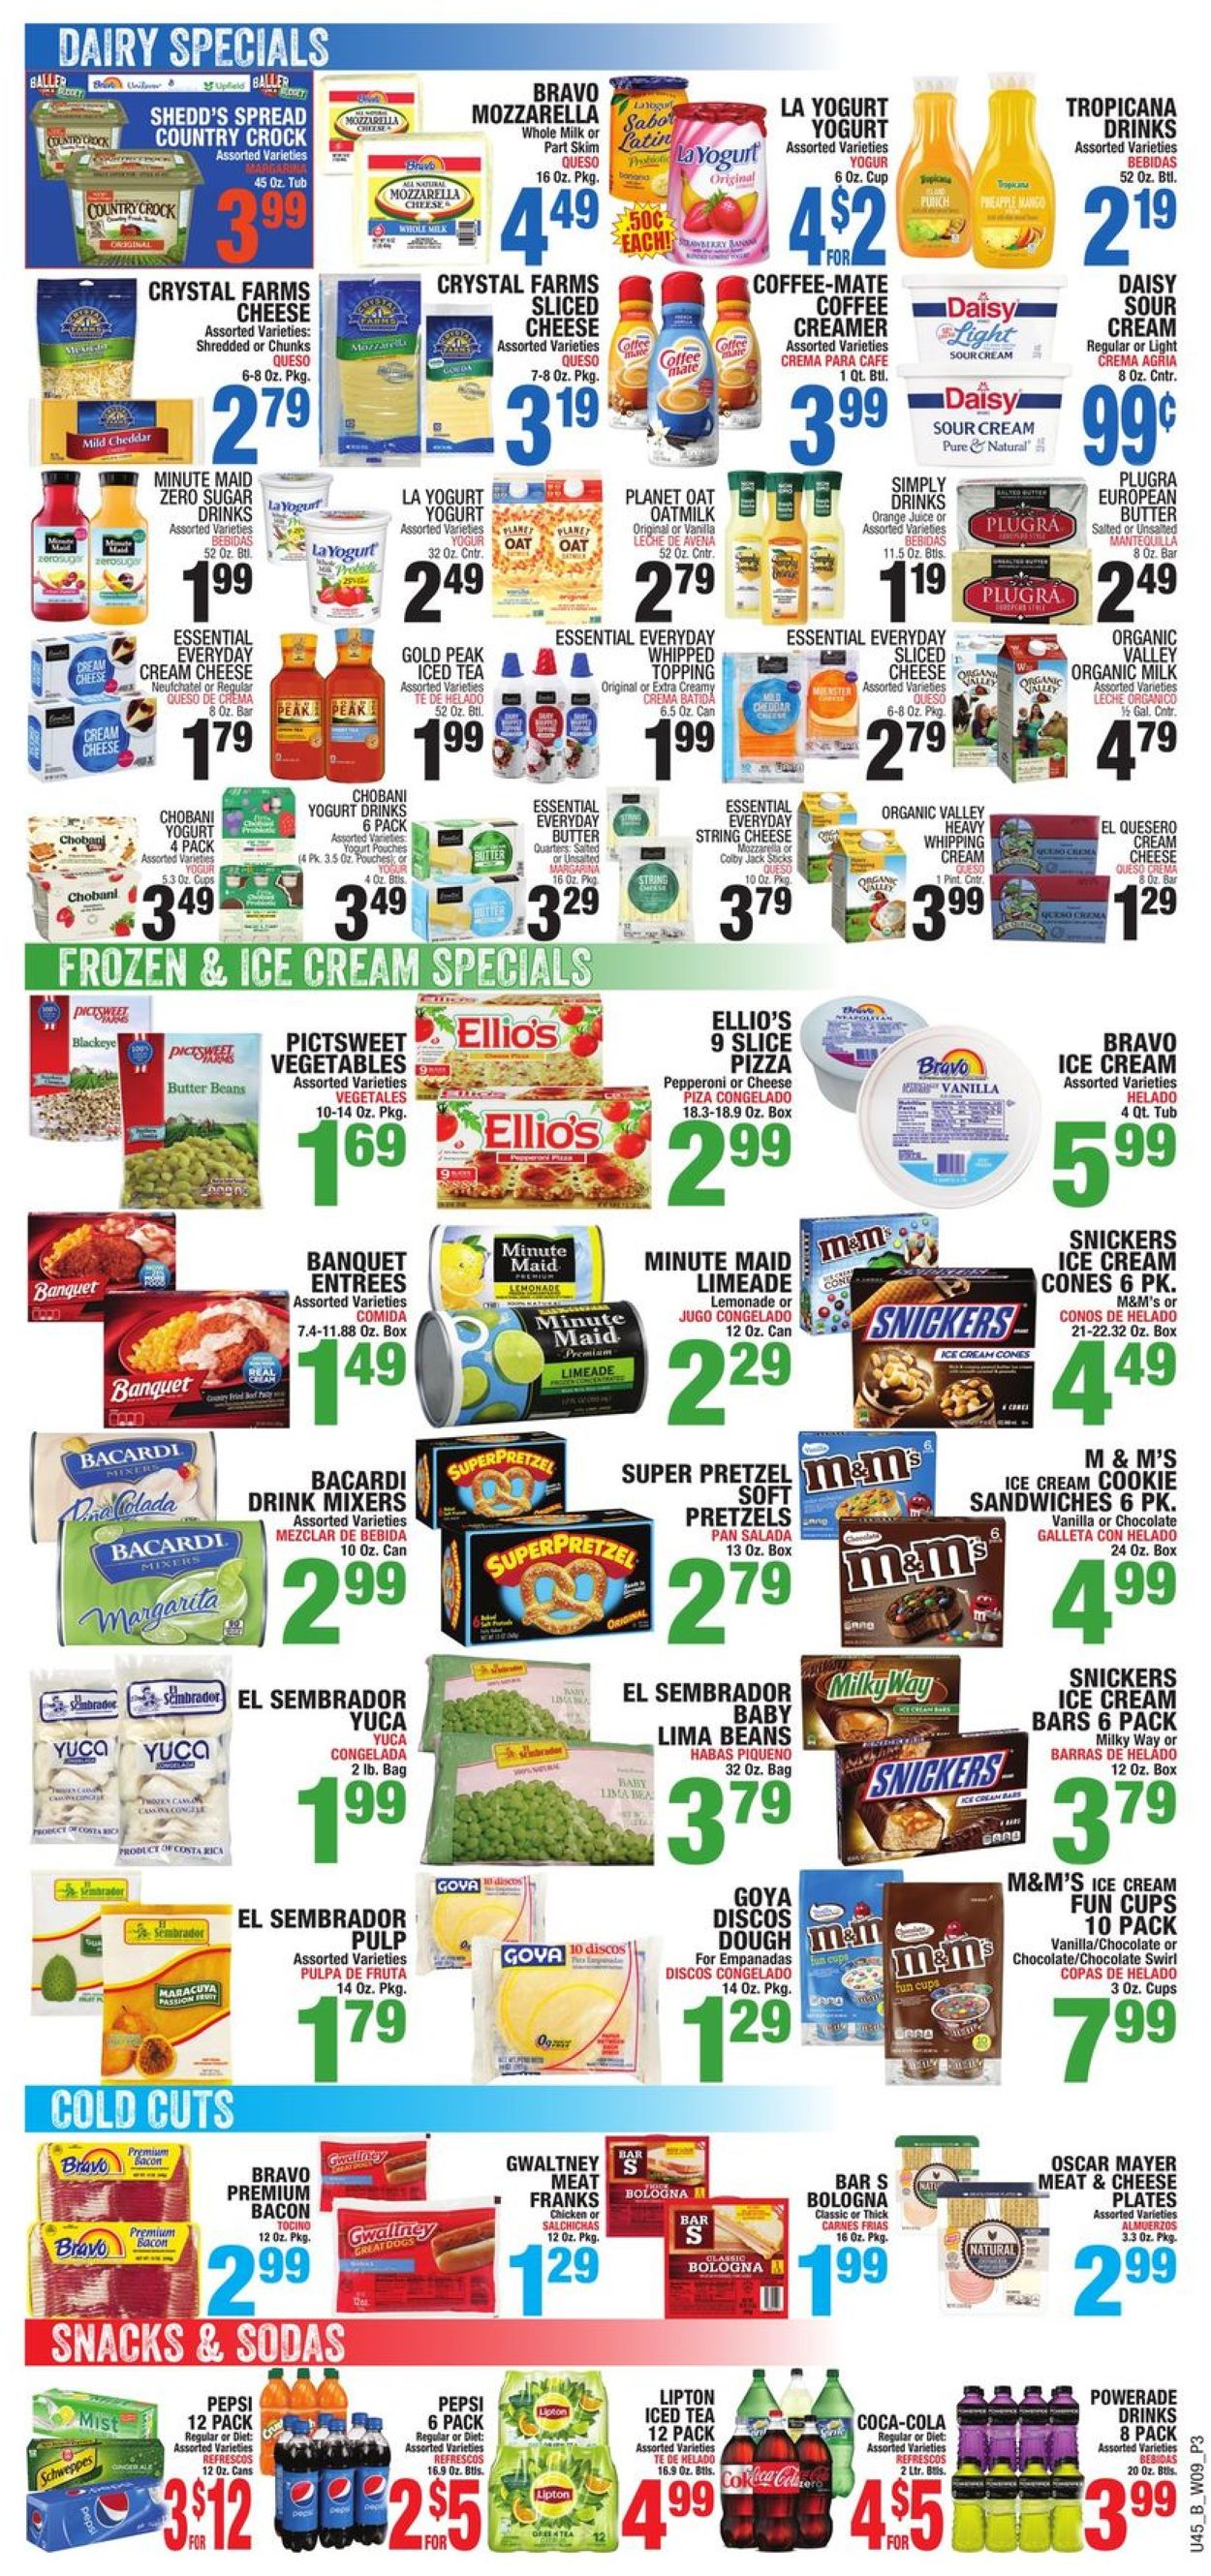 Catalogue Bravo Supermarkets from 02/25/2021